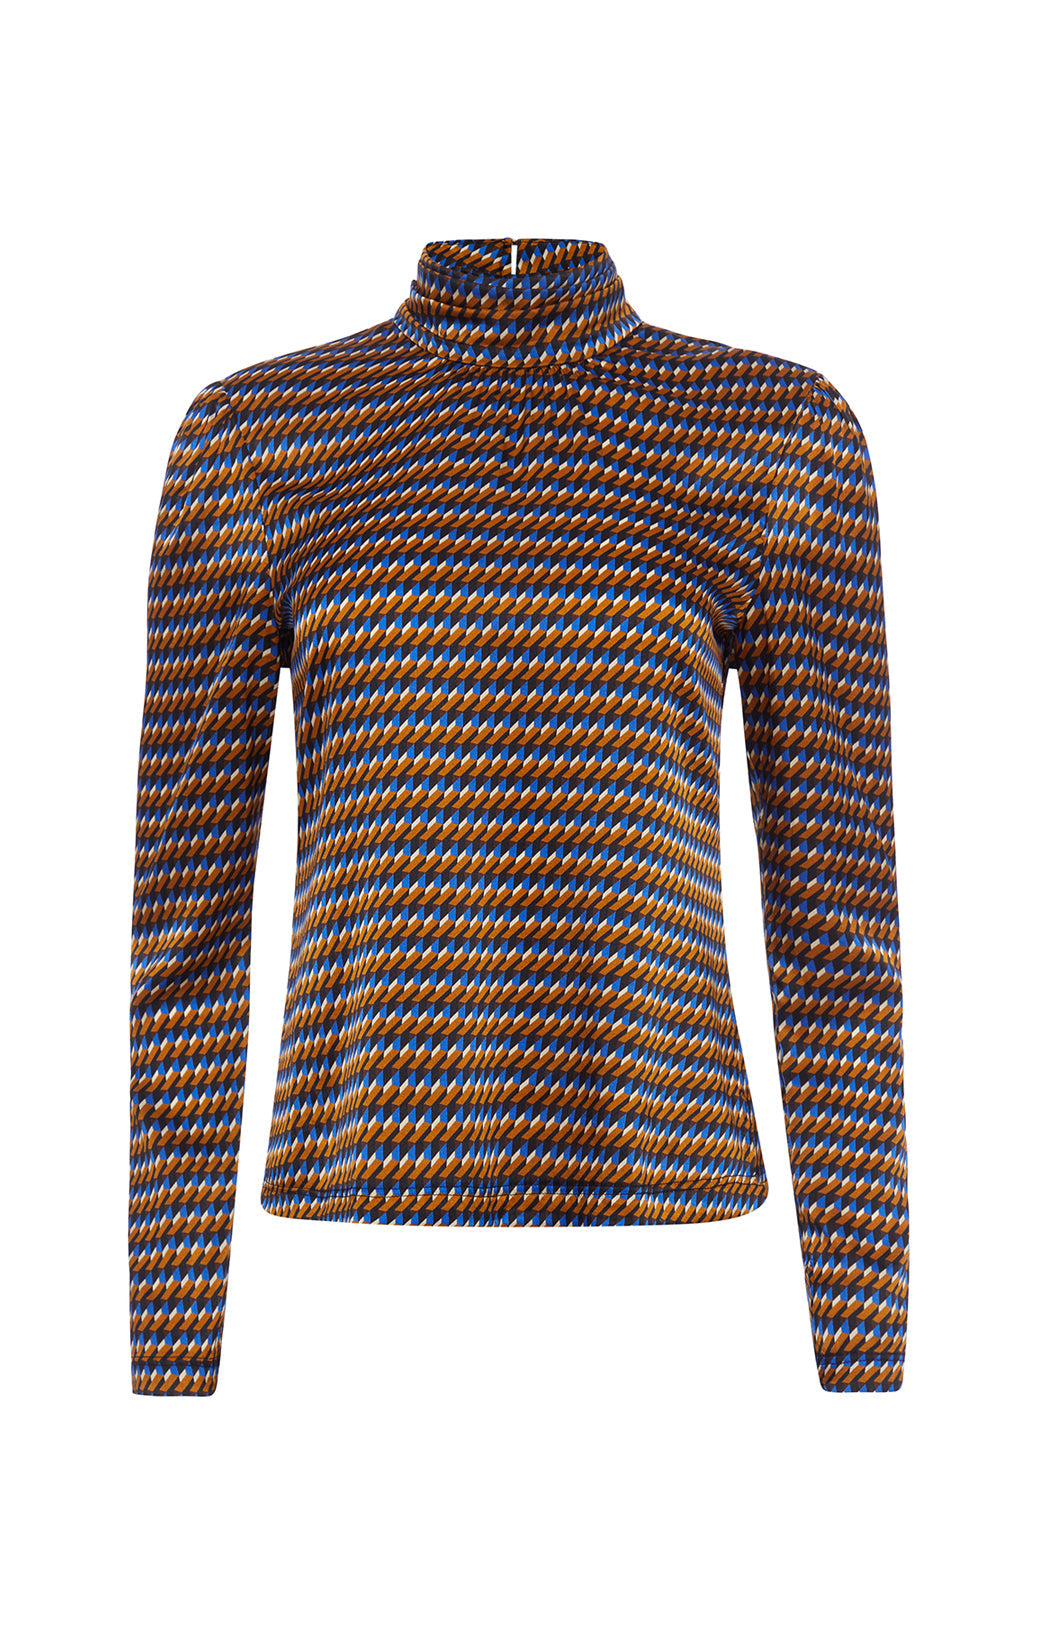 Lineup - Striped Navy Dolman Sweater